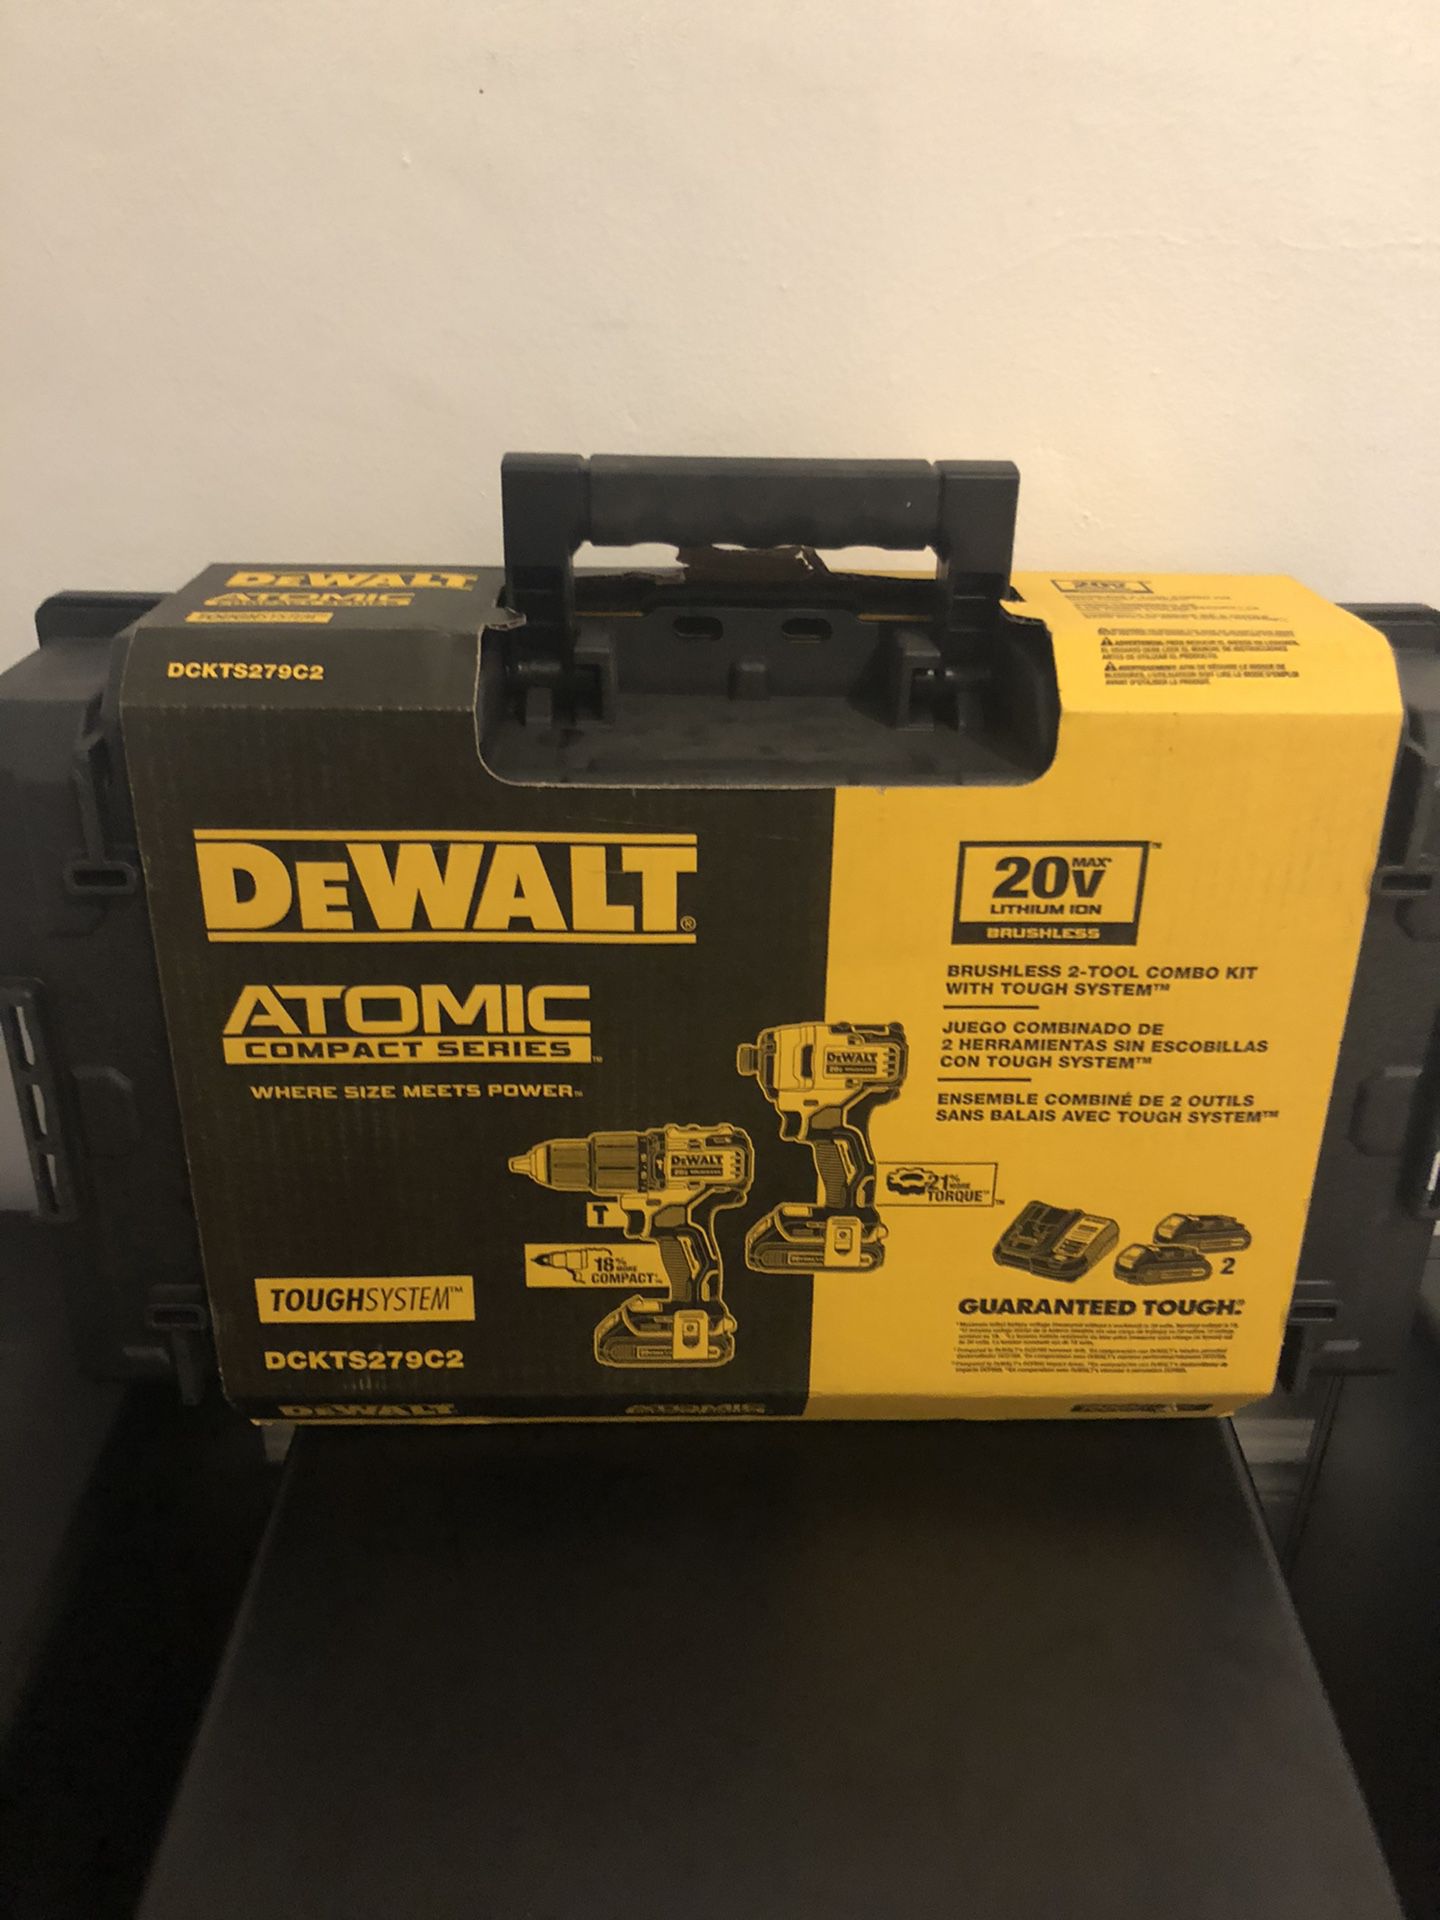 Dewalt Atomic 20v drill and impact brushless New